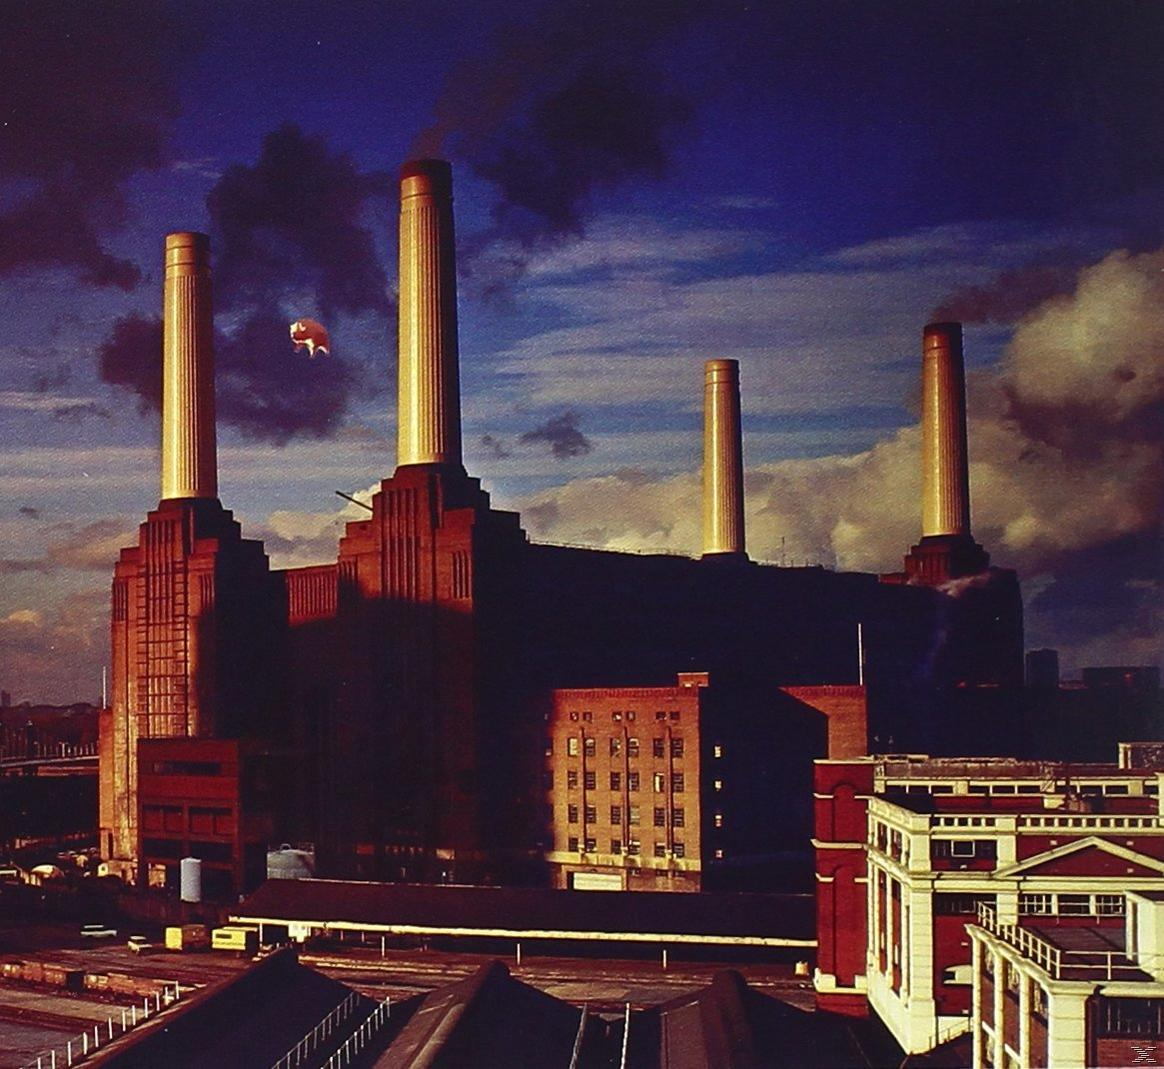 Pink (CD) - Animals Floyd -